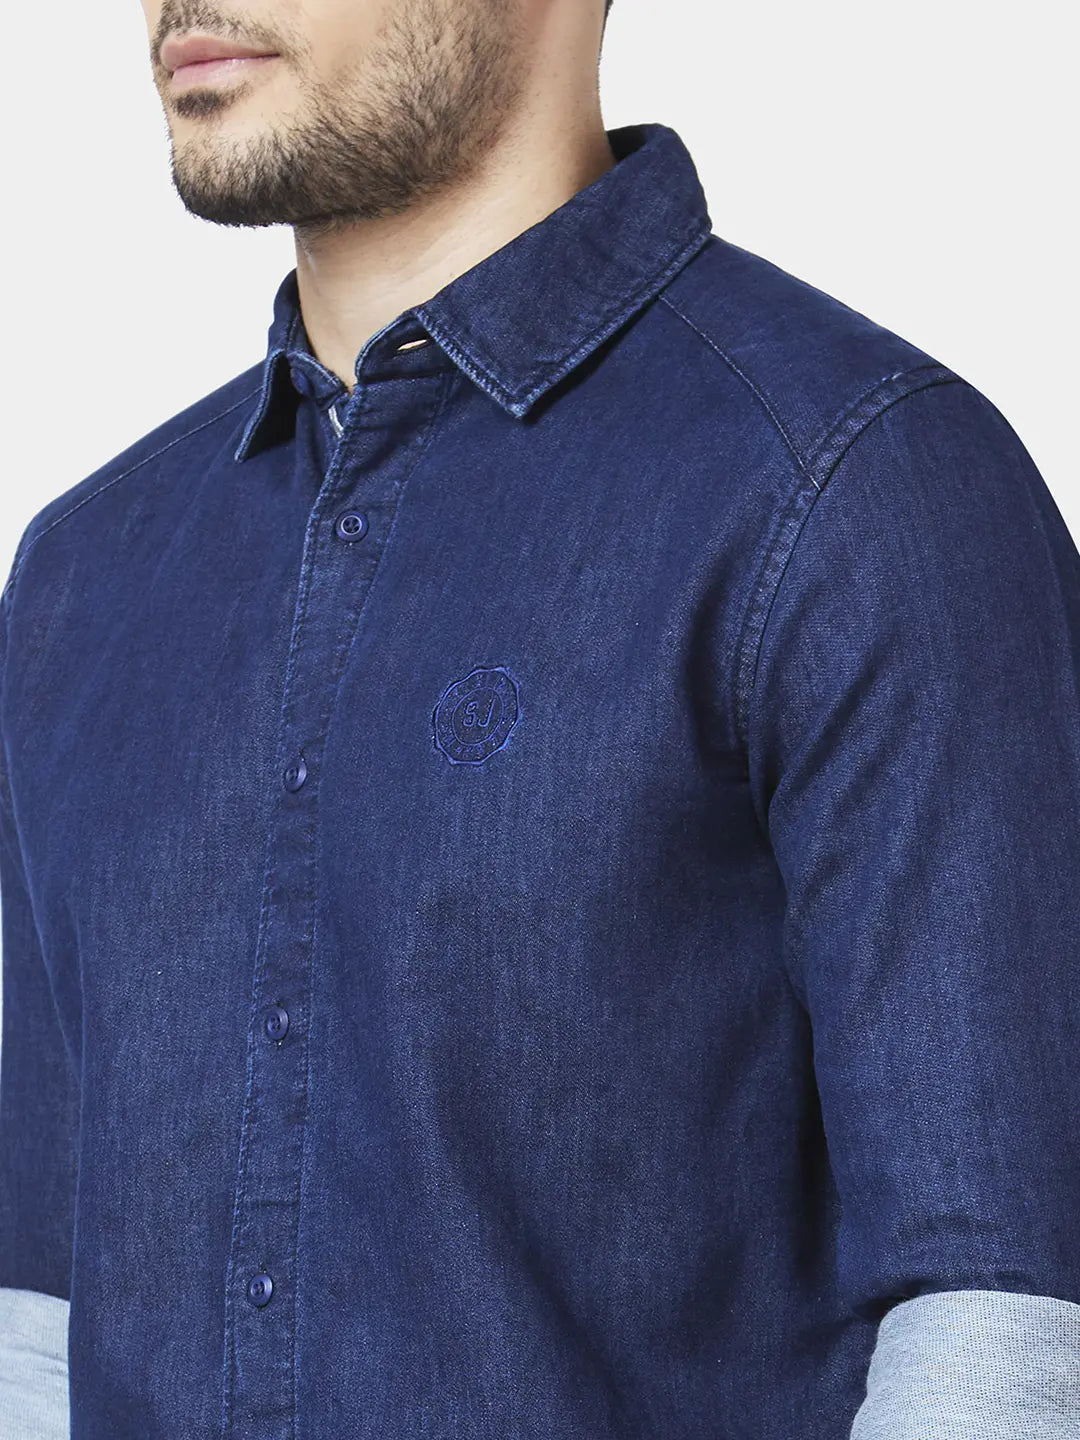 Plain Men Blue Denim Shirt, Regular Fit at Rs 279 in New Delhi | ID:  2848953685655